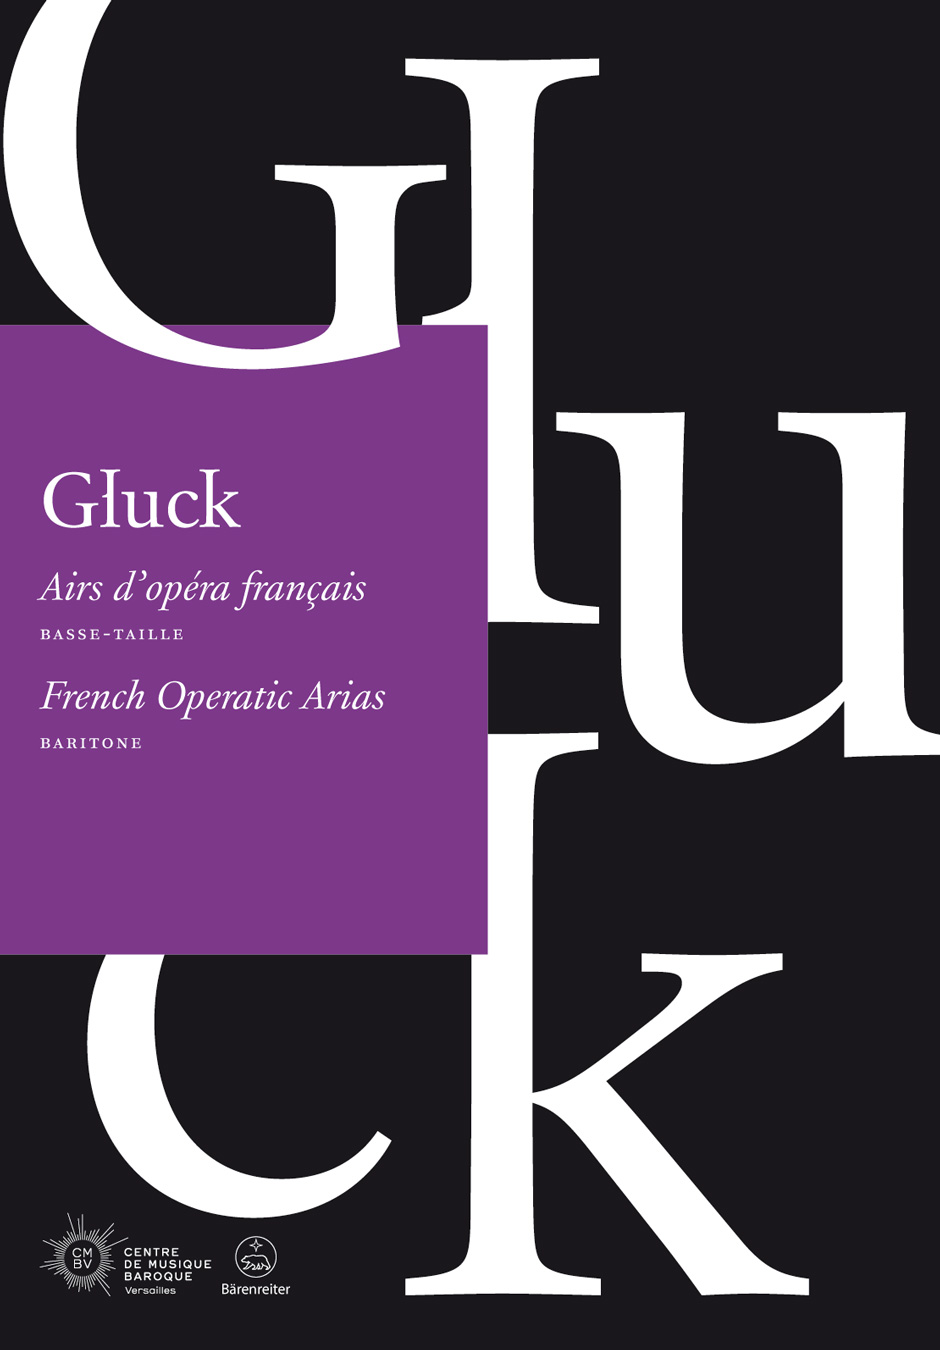 Gluck French Operatic Arias Baritone Voice & Piano Sheet Music Songbook